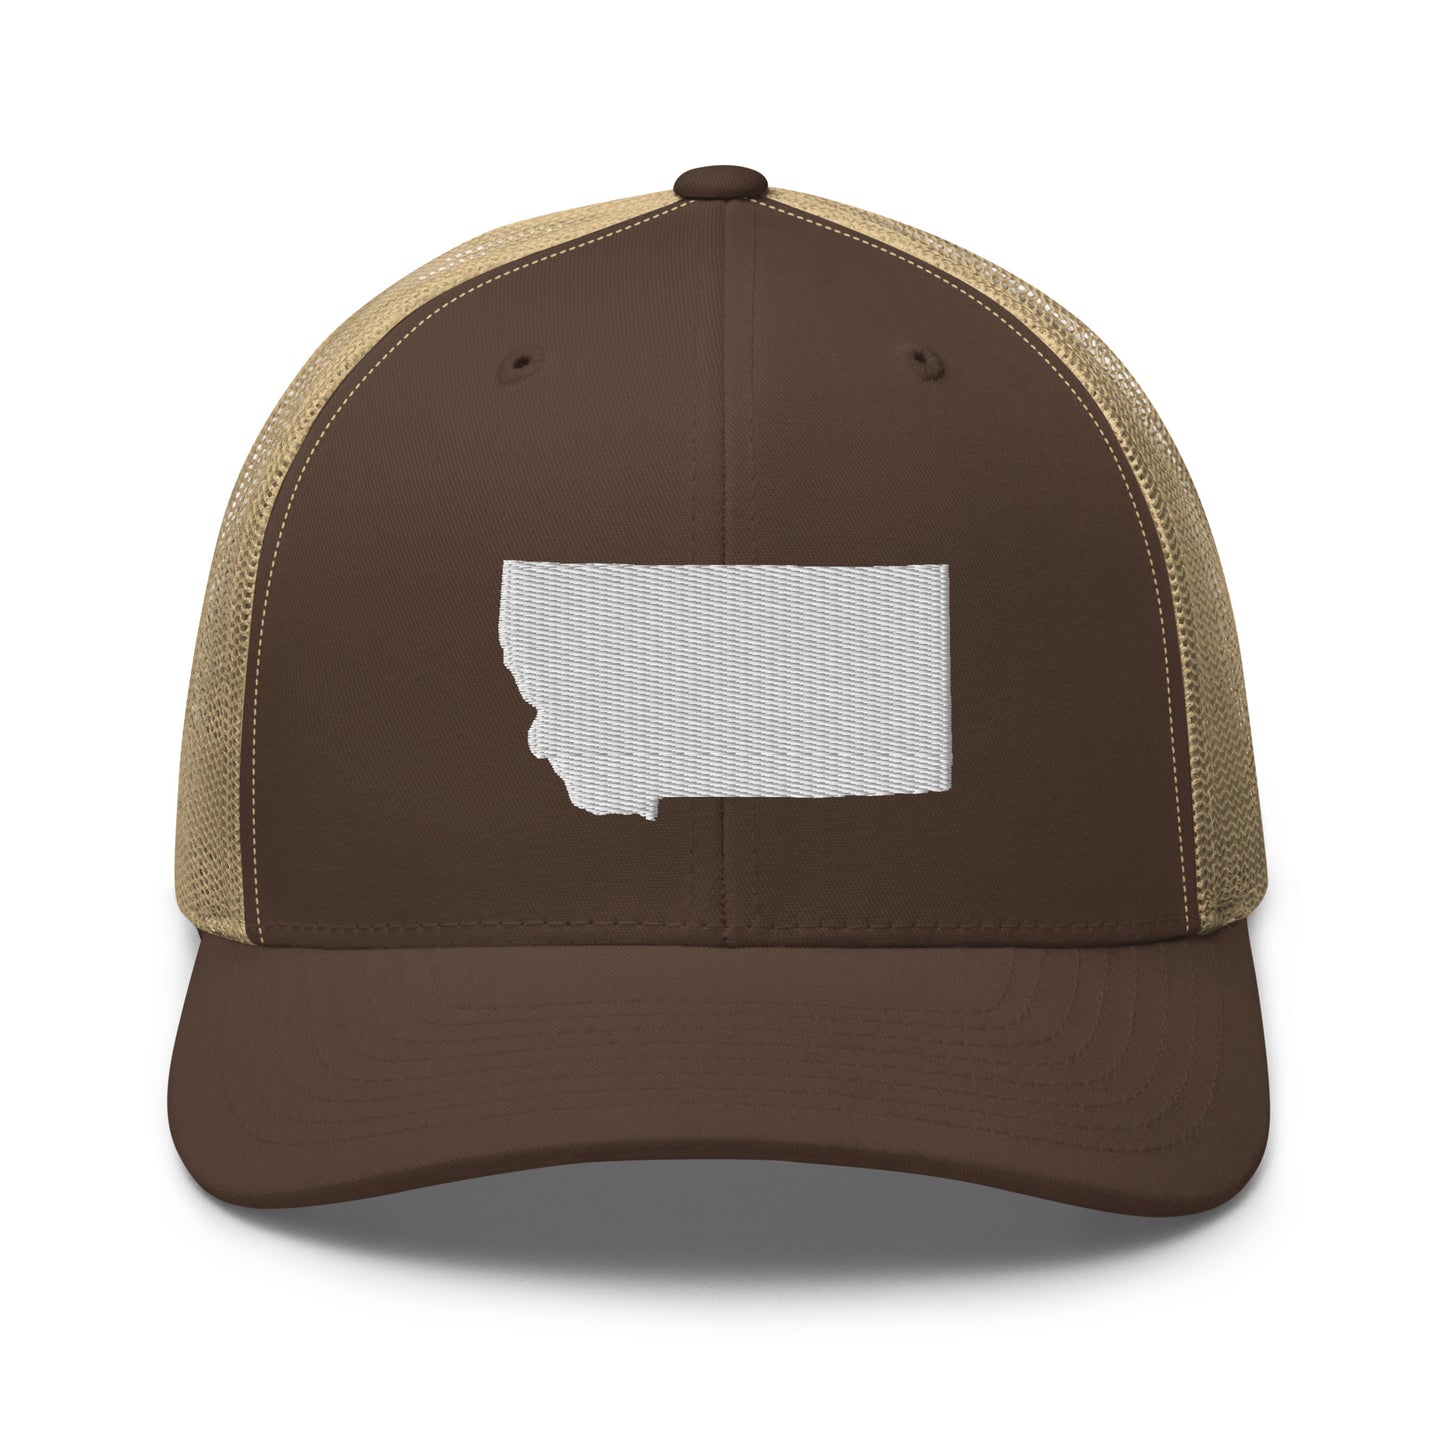 Montana State Silhouette Mid 6 Panel Snapback Trucker Hat